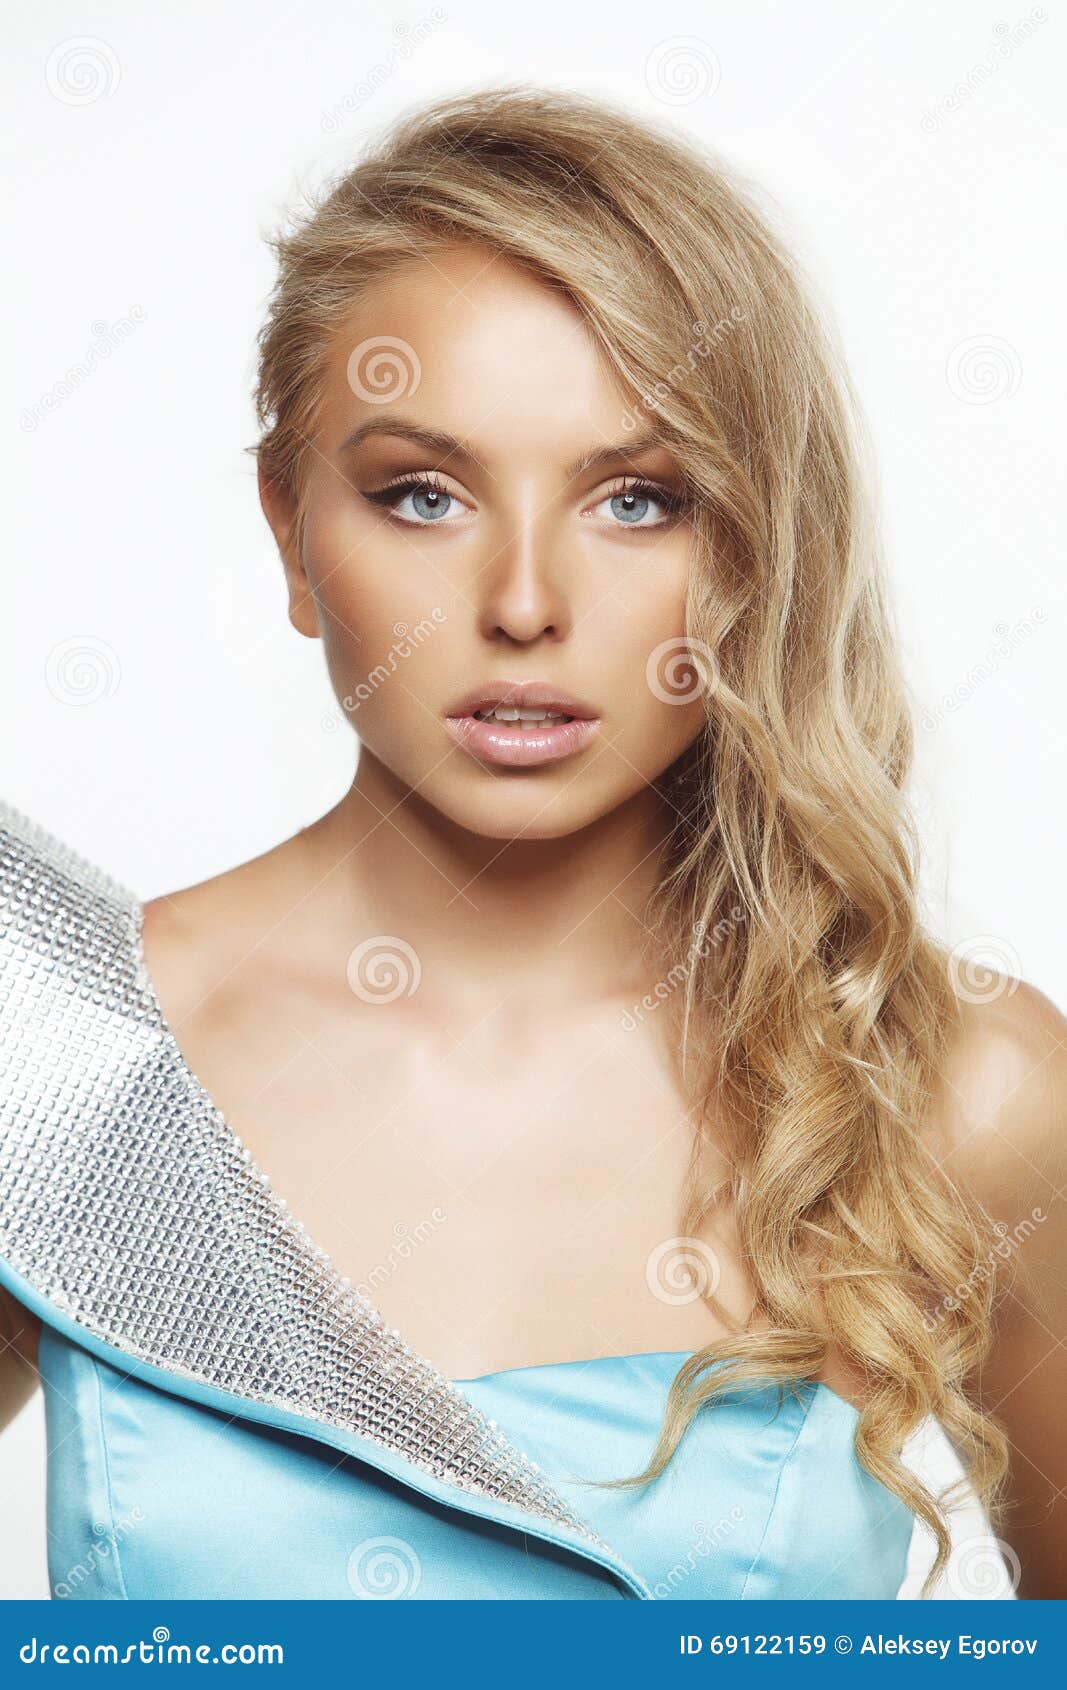 Model in a blue dress stock image. Image of elegance - 69122159